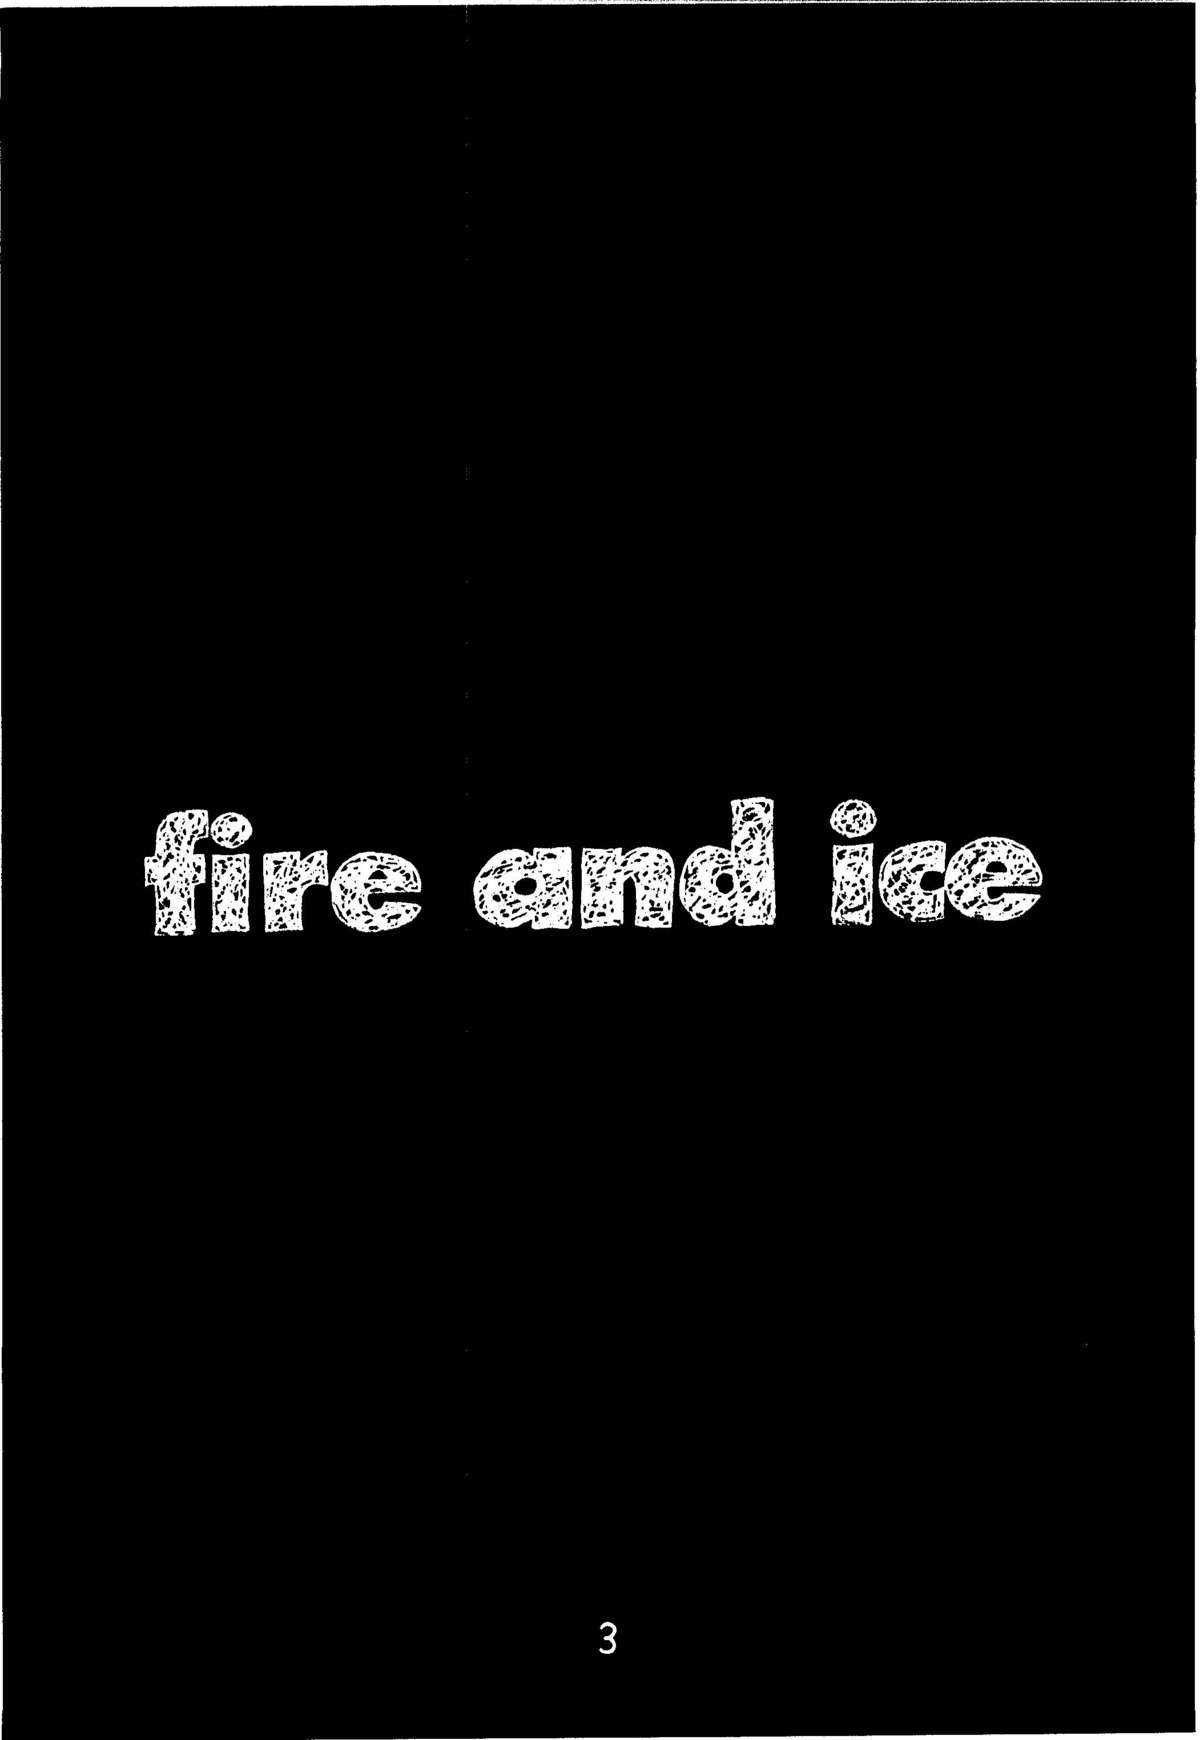 [Studio Room] Fire and Ice 